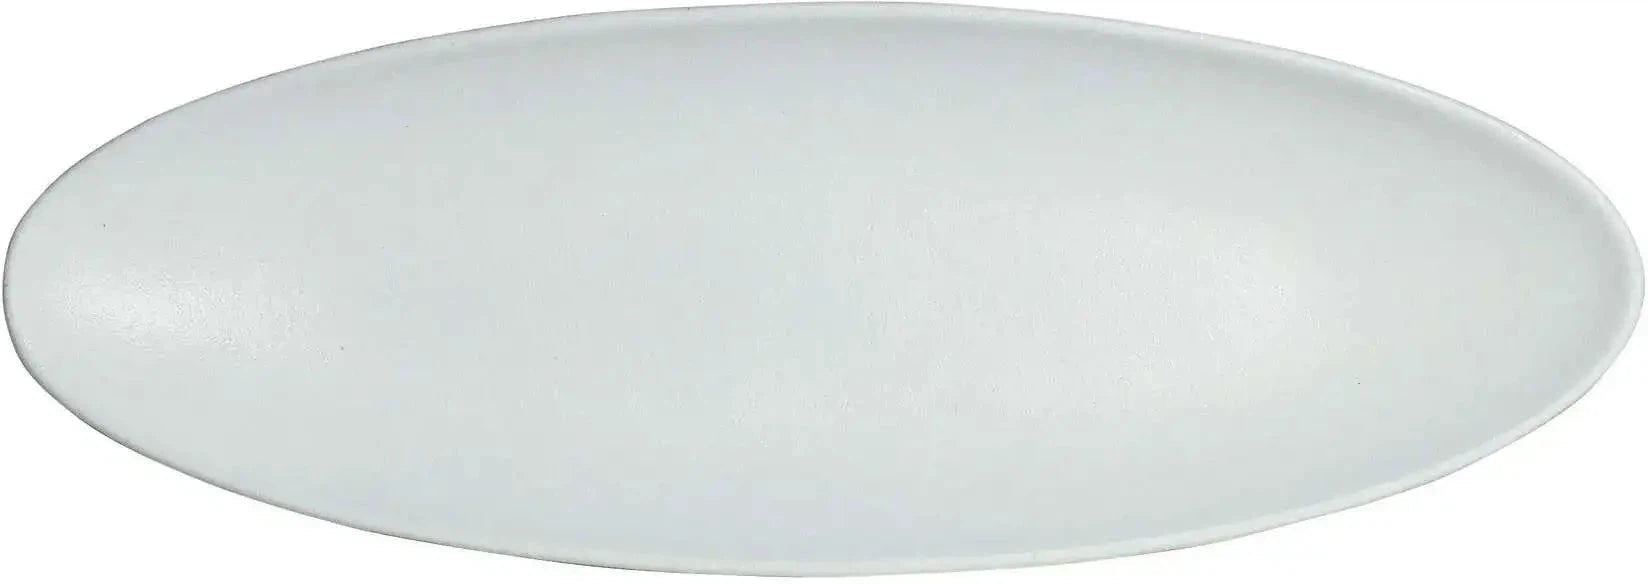 Bugambilia - Mod 2.75 Oz Oval White Fruit Bowl With Glossy Smooth Finish - FO000-MOD-WW